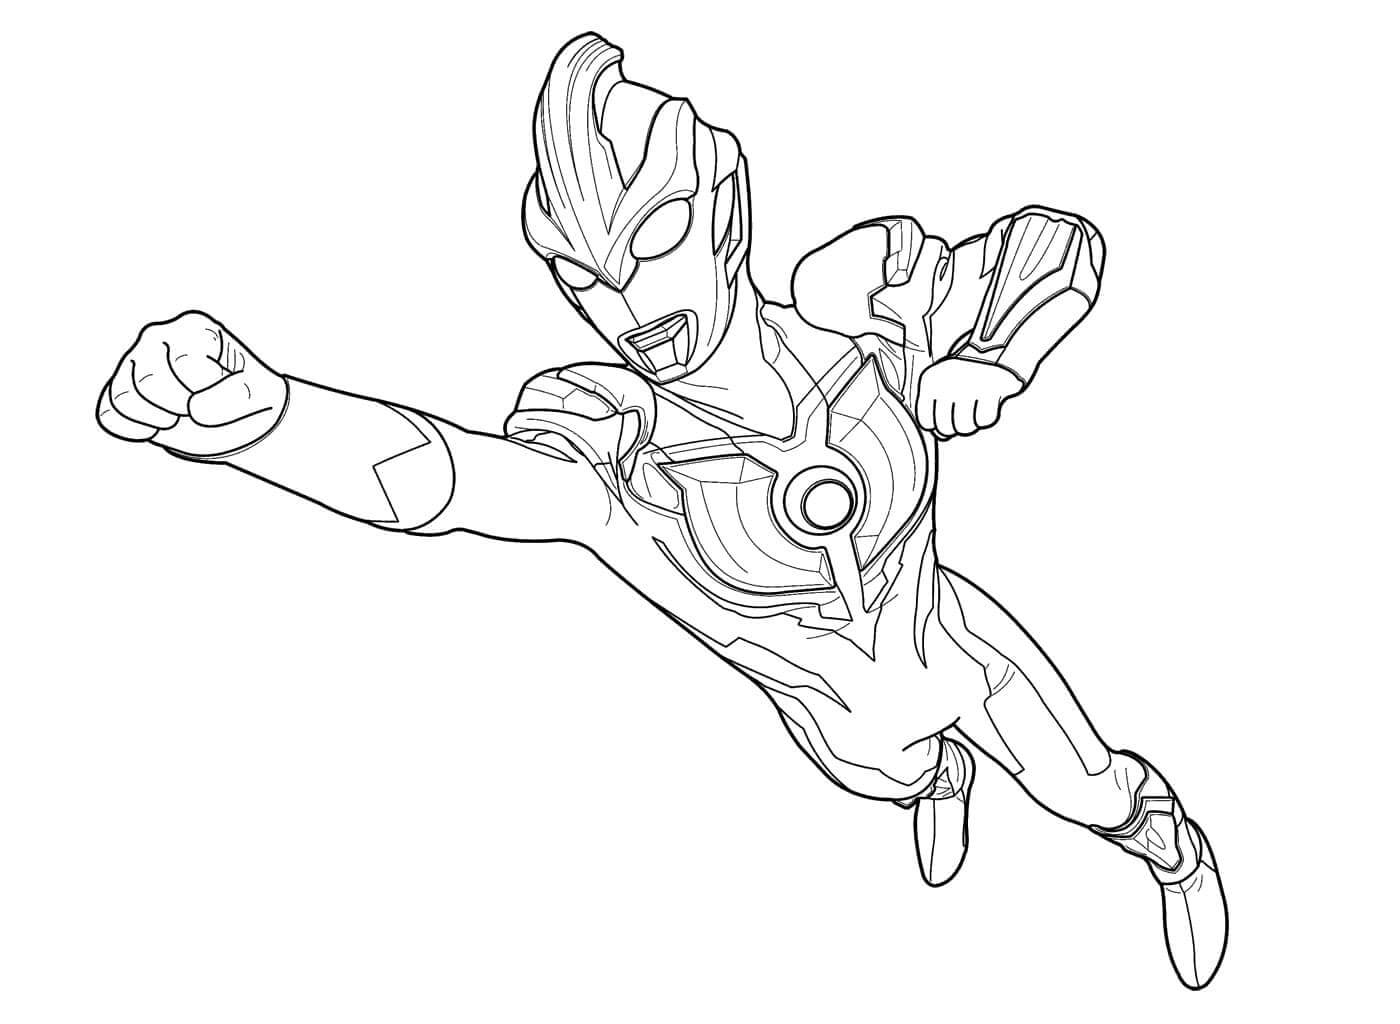 Ultraman Flying